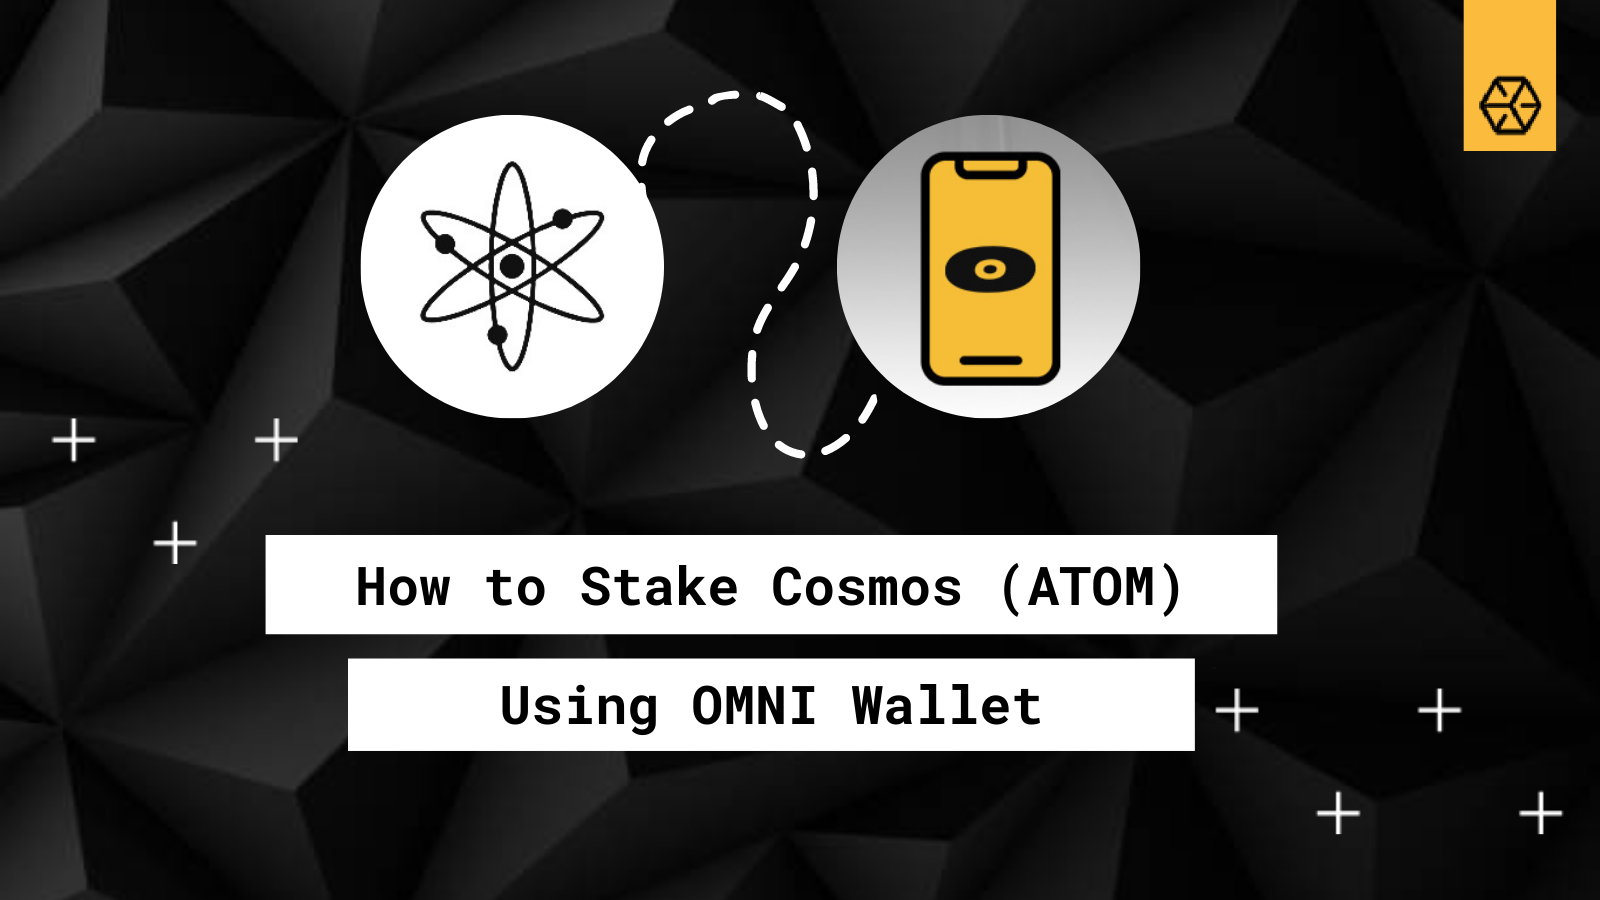 How to Stake Cosmos (ATOM) via OMNI wallet